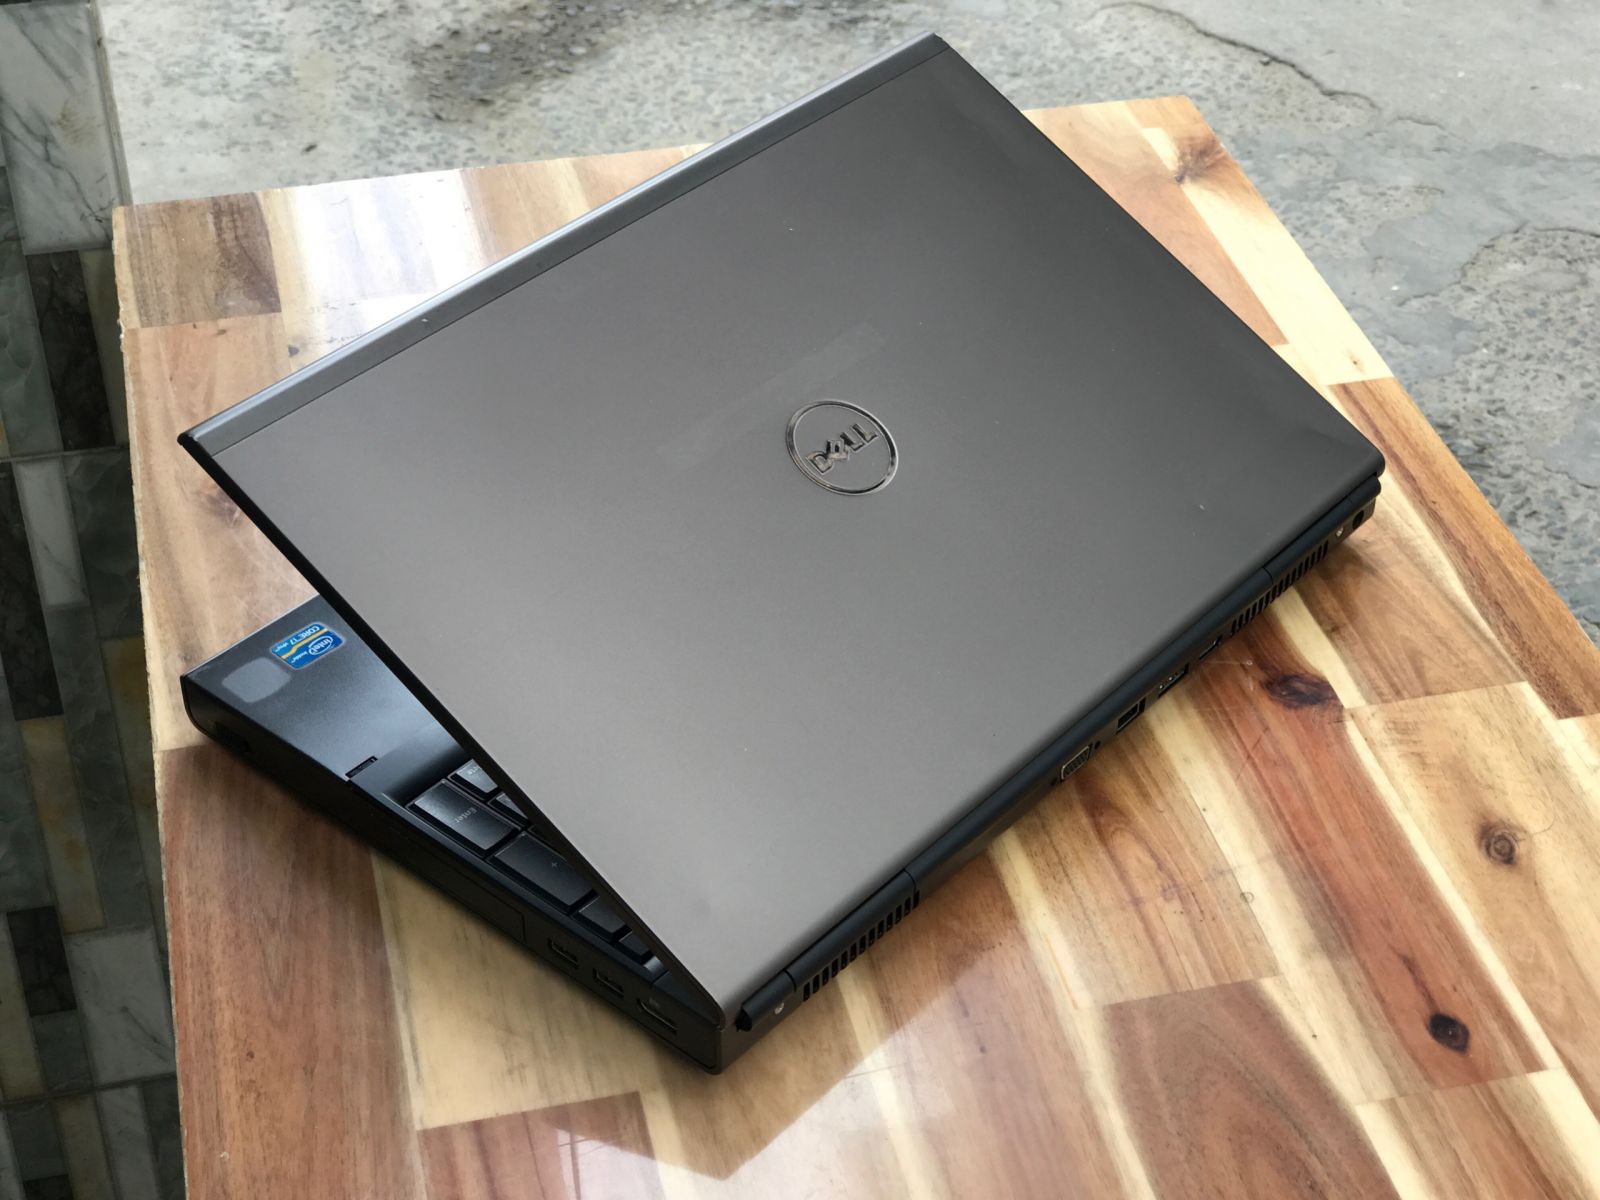 Laptop Dell Precision M4800, i7 4800QM 8G HDD 500G Quadro K1100M Full